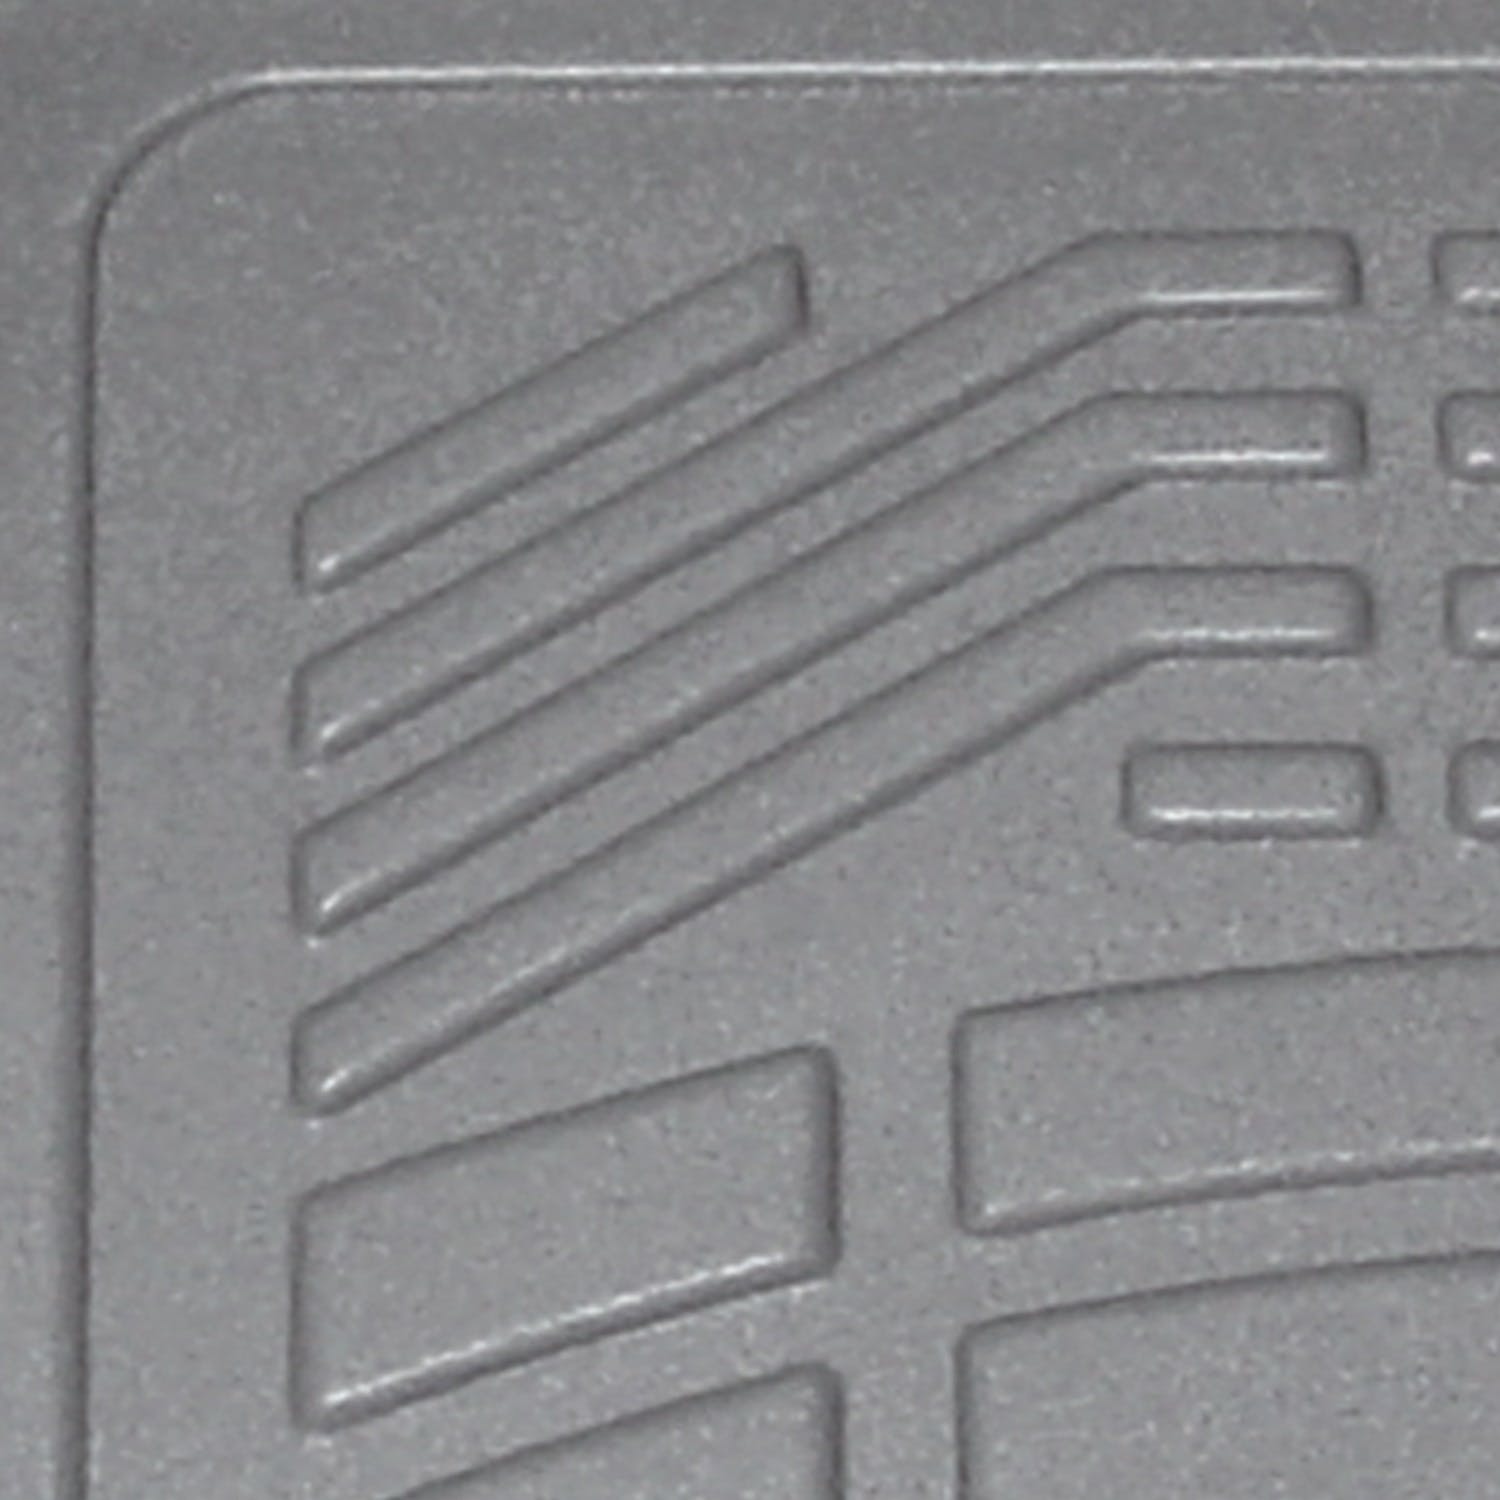 Westin Automotive 72-120052 Sure Fit Floor Liners Front Gray